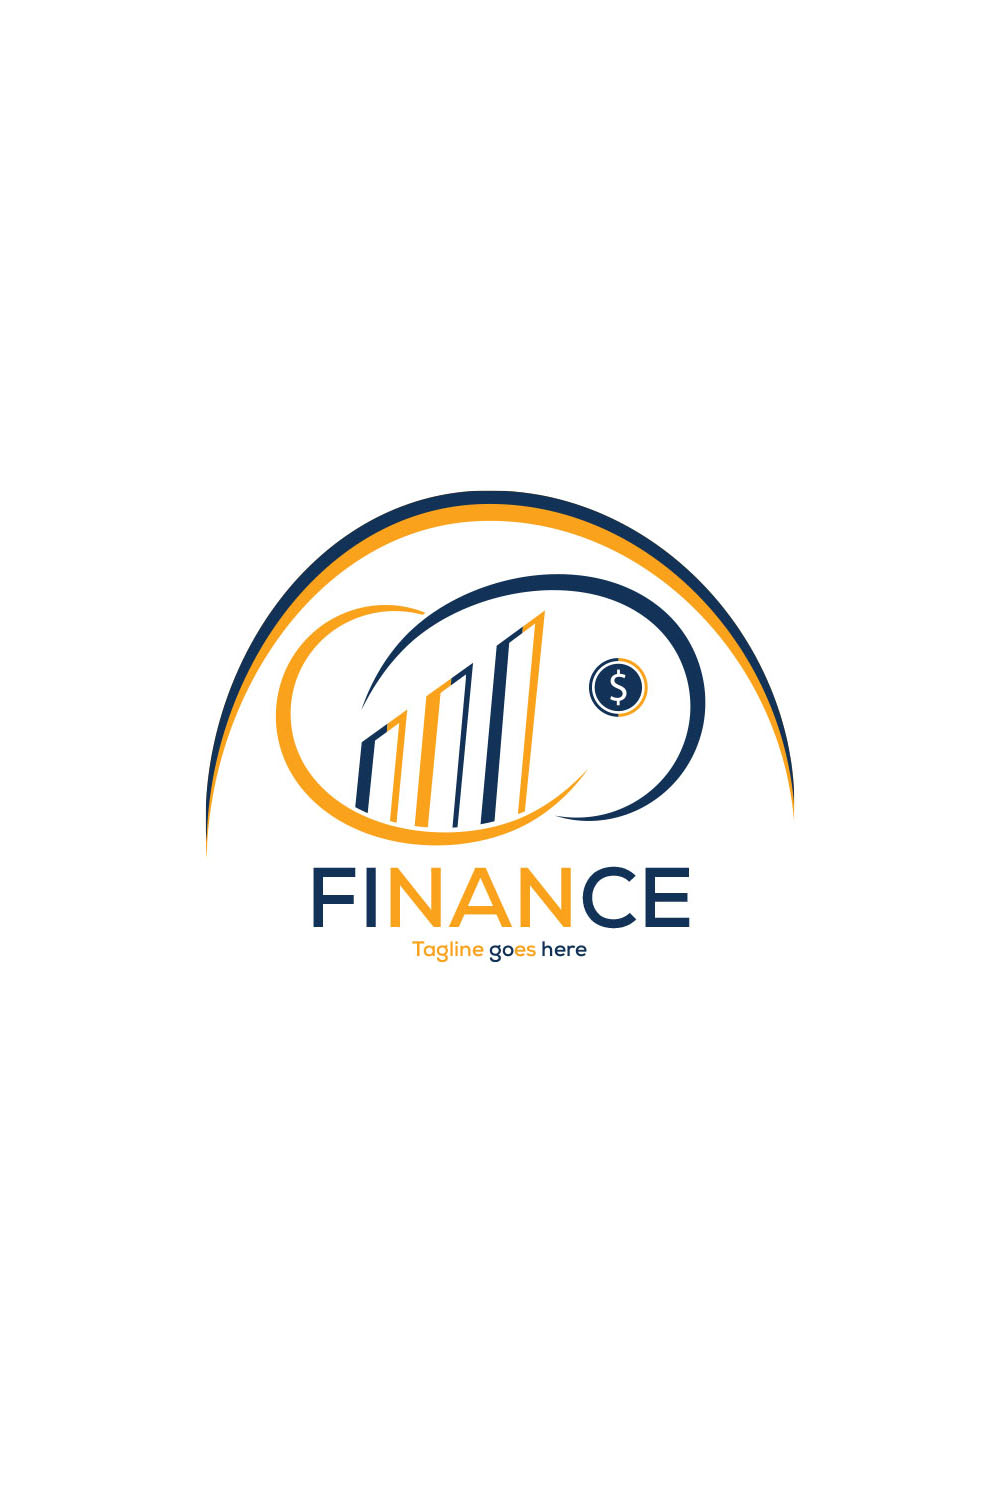 Finance Logo Design Pinterest Collage image.